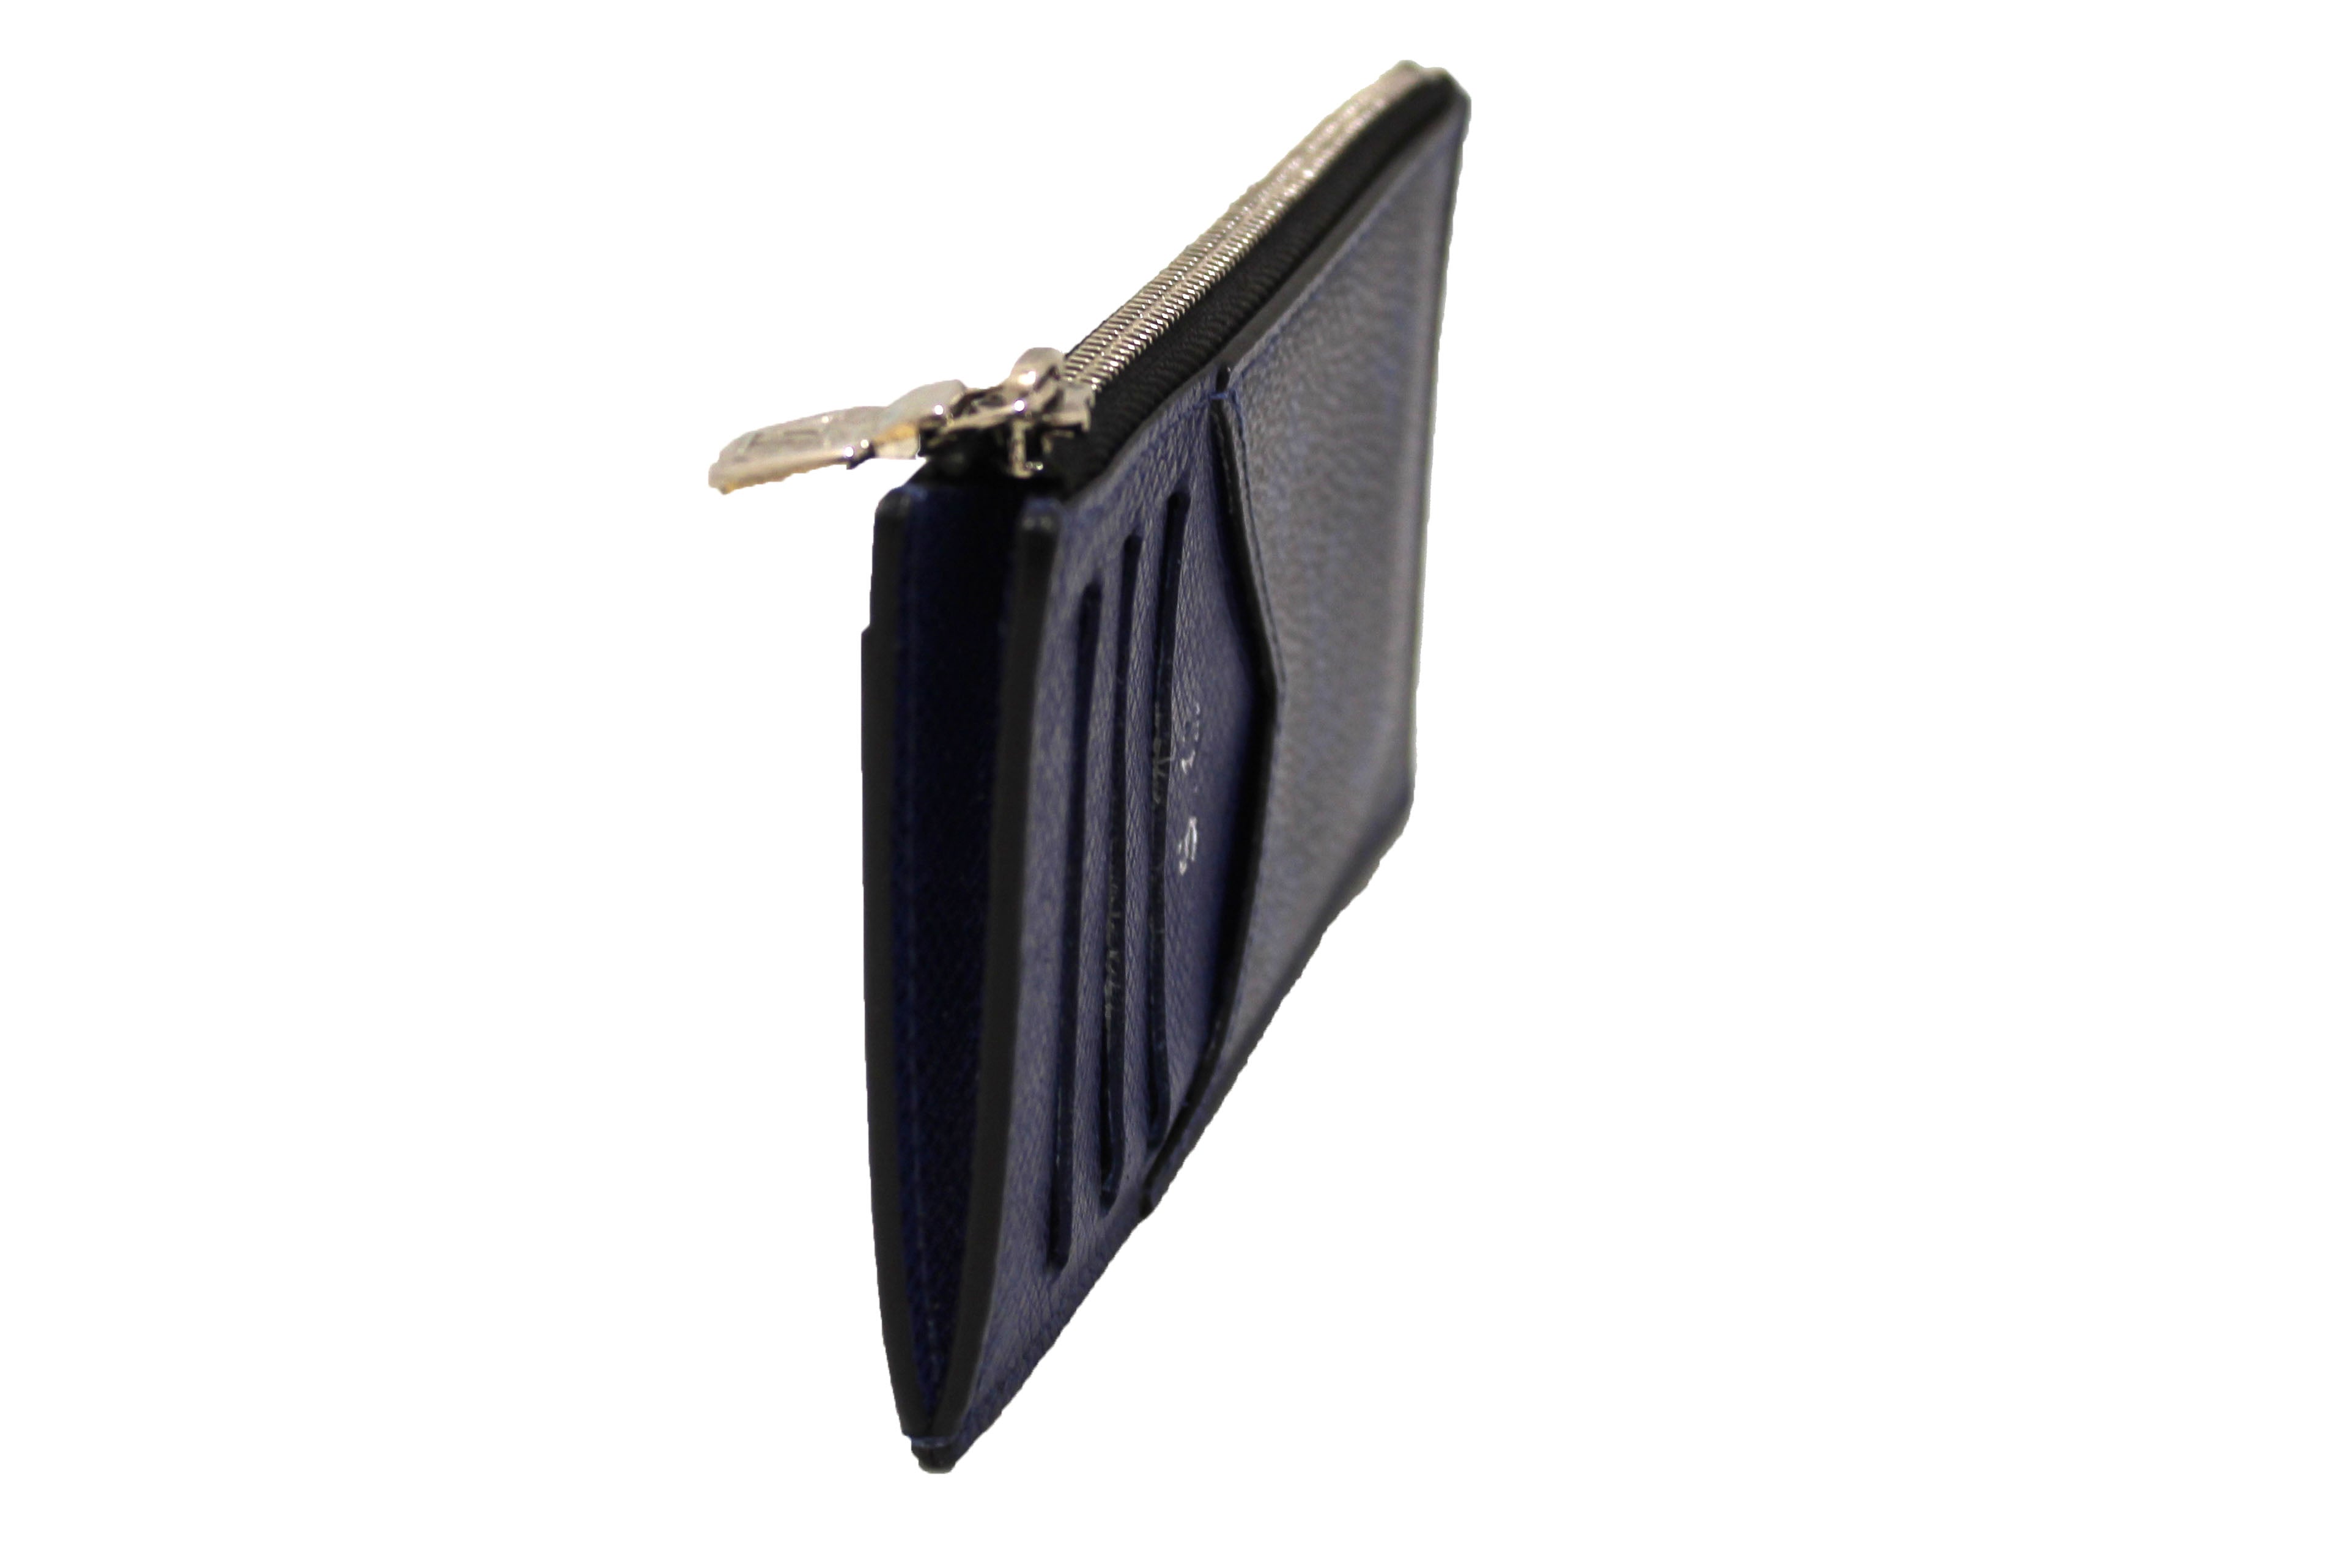 Louis Vuitton Taiga Leather Card Holder Wallet Case